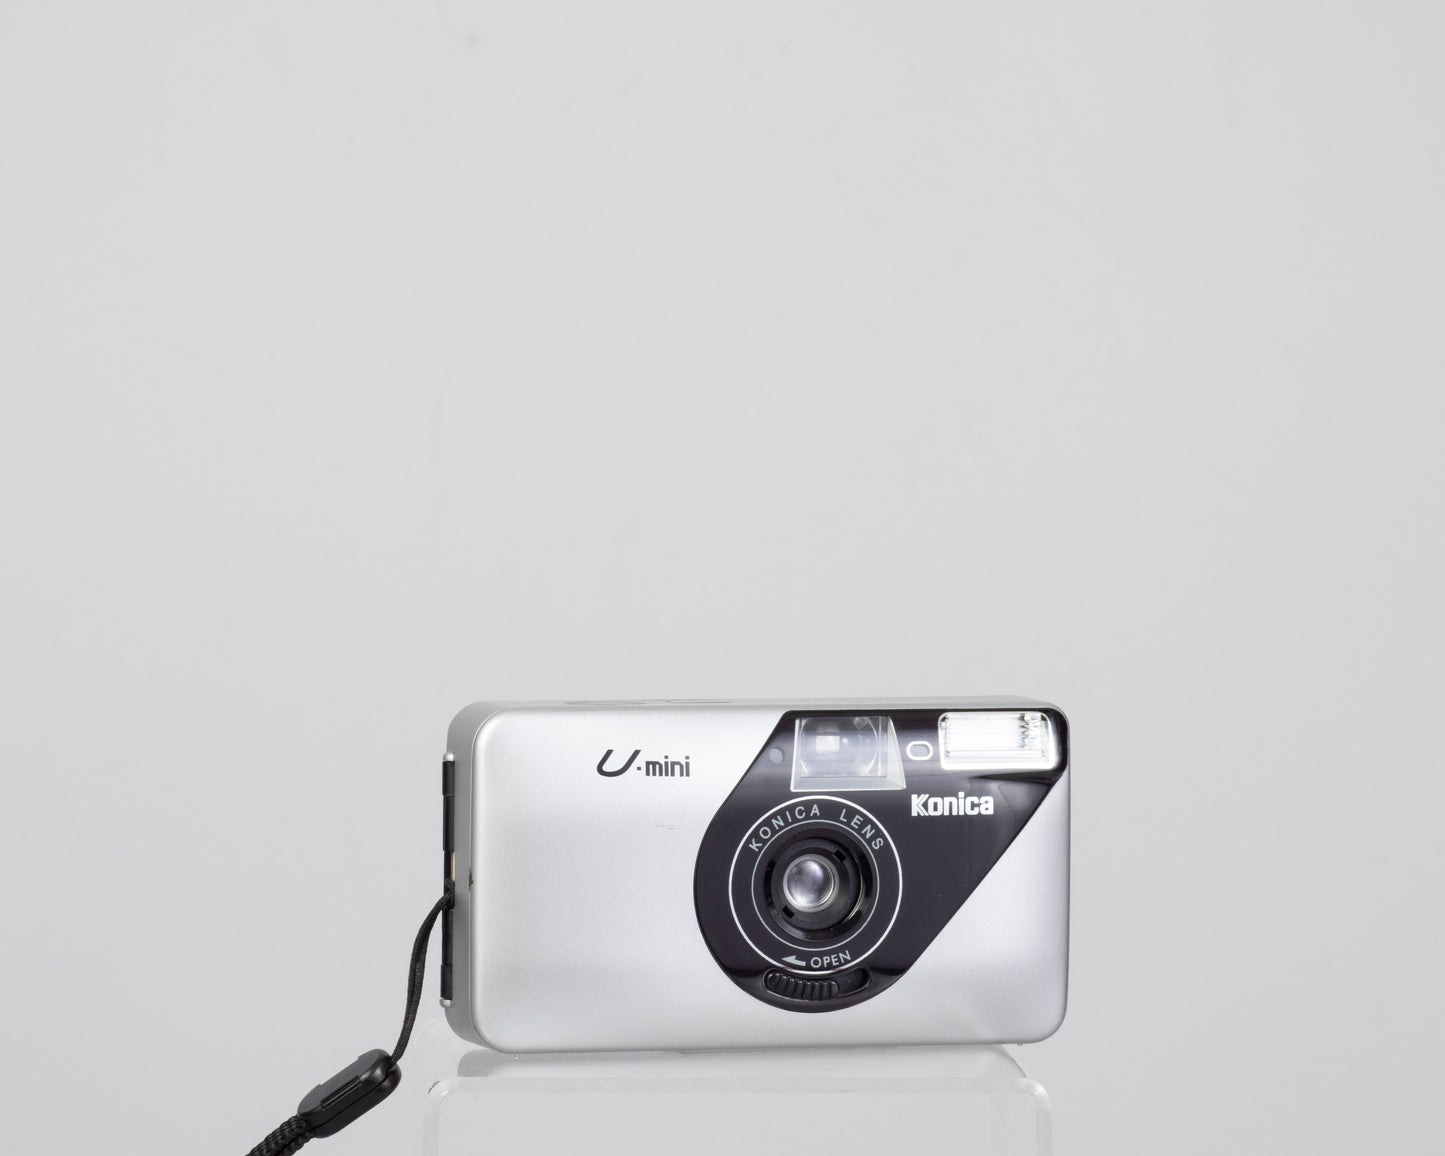 Appareil photo Konica U-mini ultra compact 35 mm point-and-shoot (série 3318453)